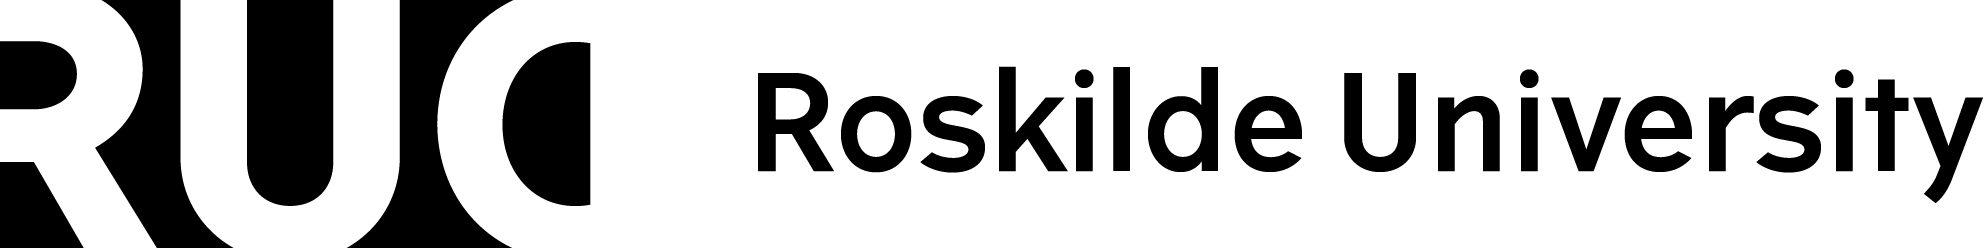 EXTF_20200601_RUC_ROSKILDE_UNIVERSITY_BLACK_CMYK_logo